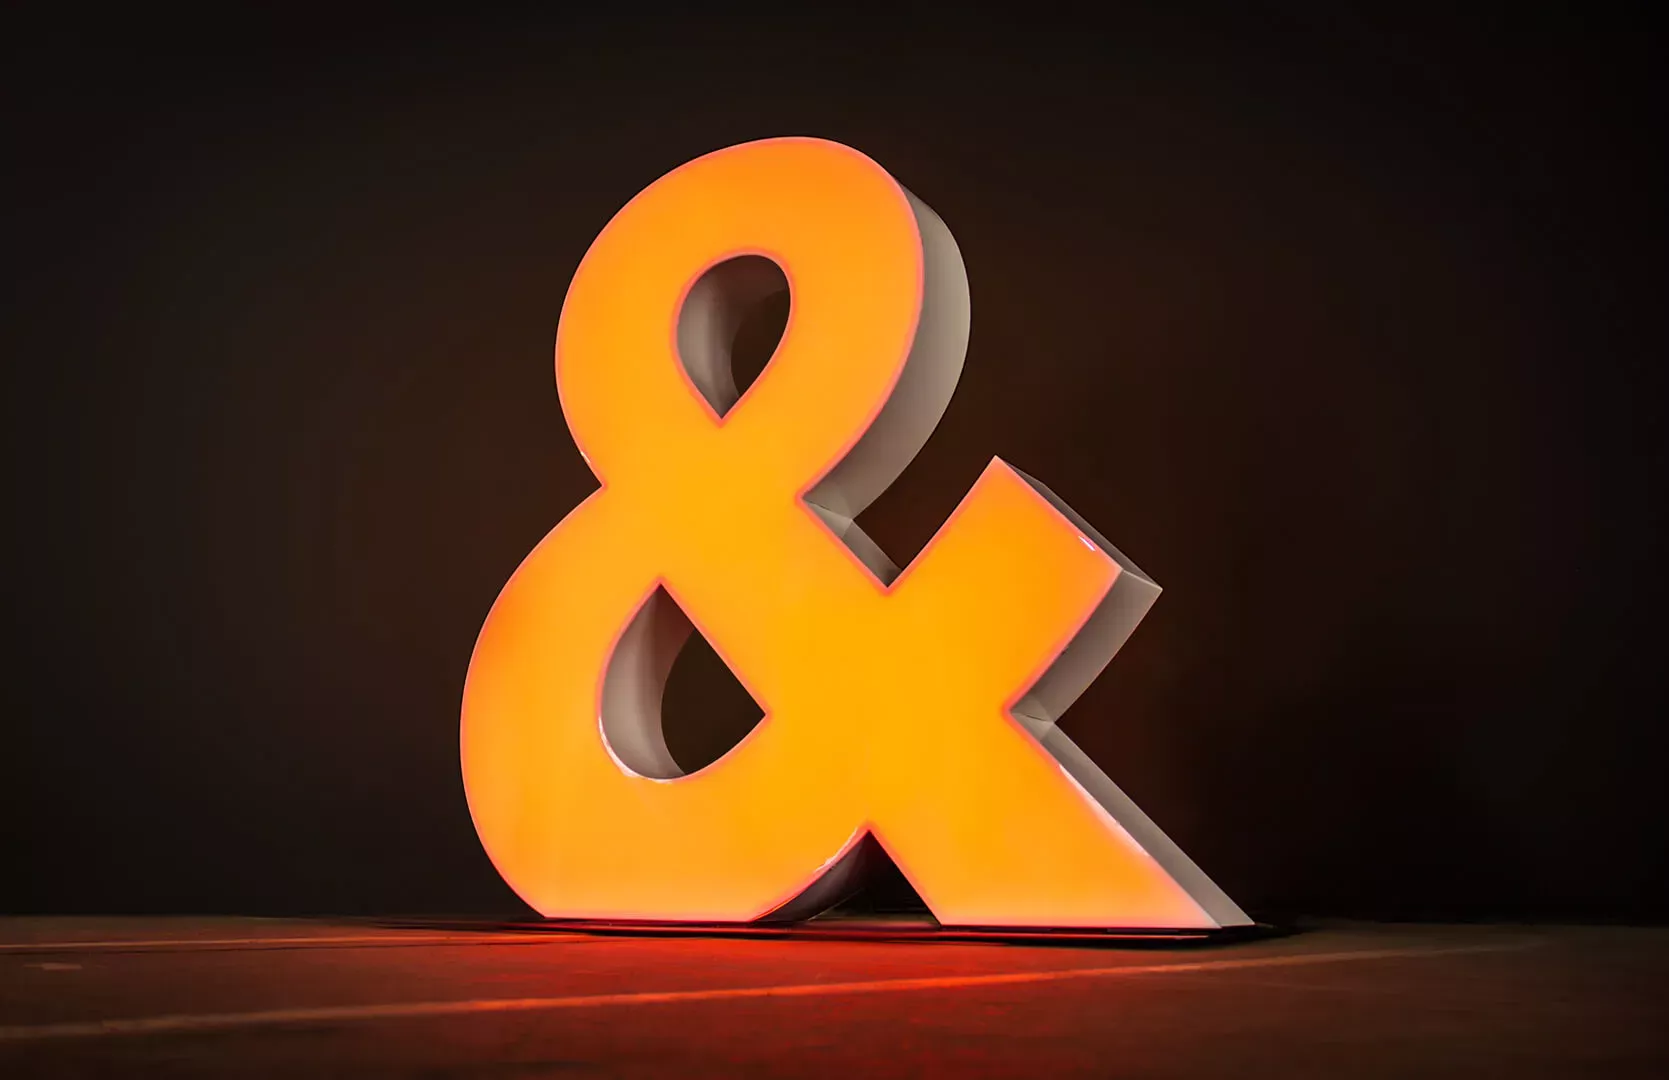 Large format letters - Giant symbol illuminated in orange color